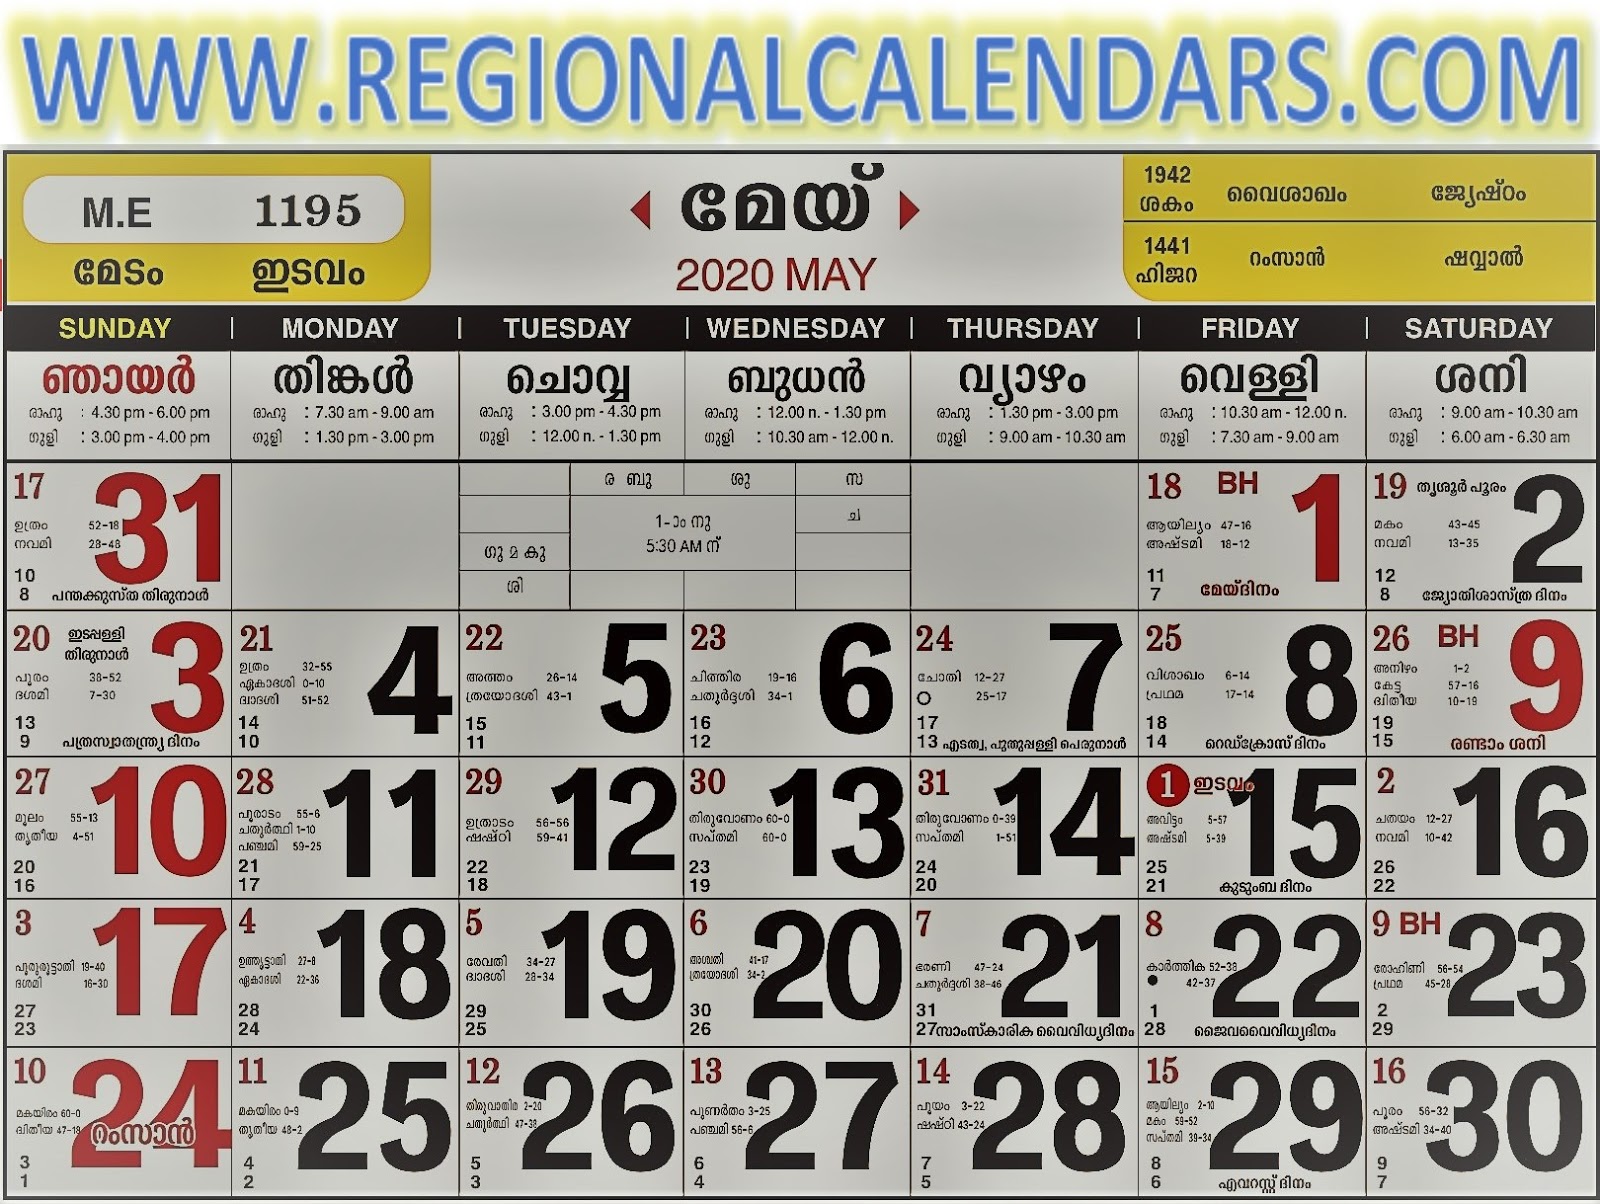 Денежный лунный календарь на апрель 2024 года